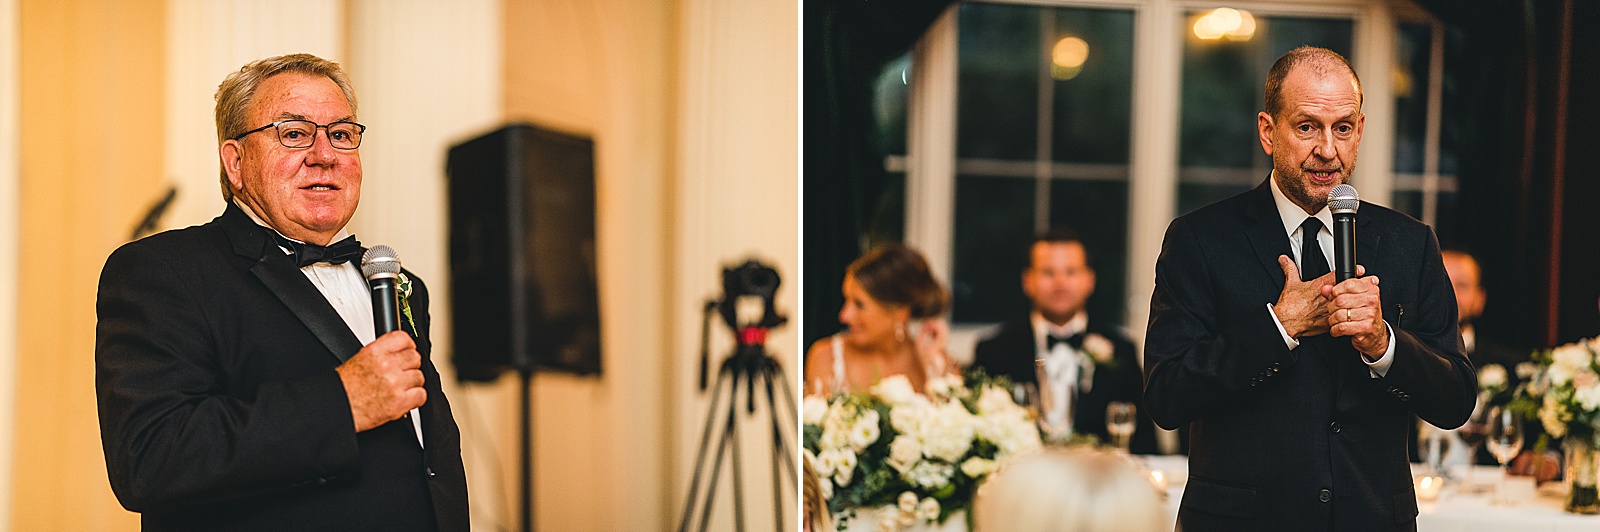 45 speeches at weddings - Medinah Country Club Wedding Photos // Courtney + Tim